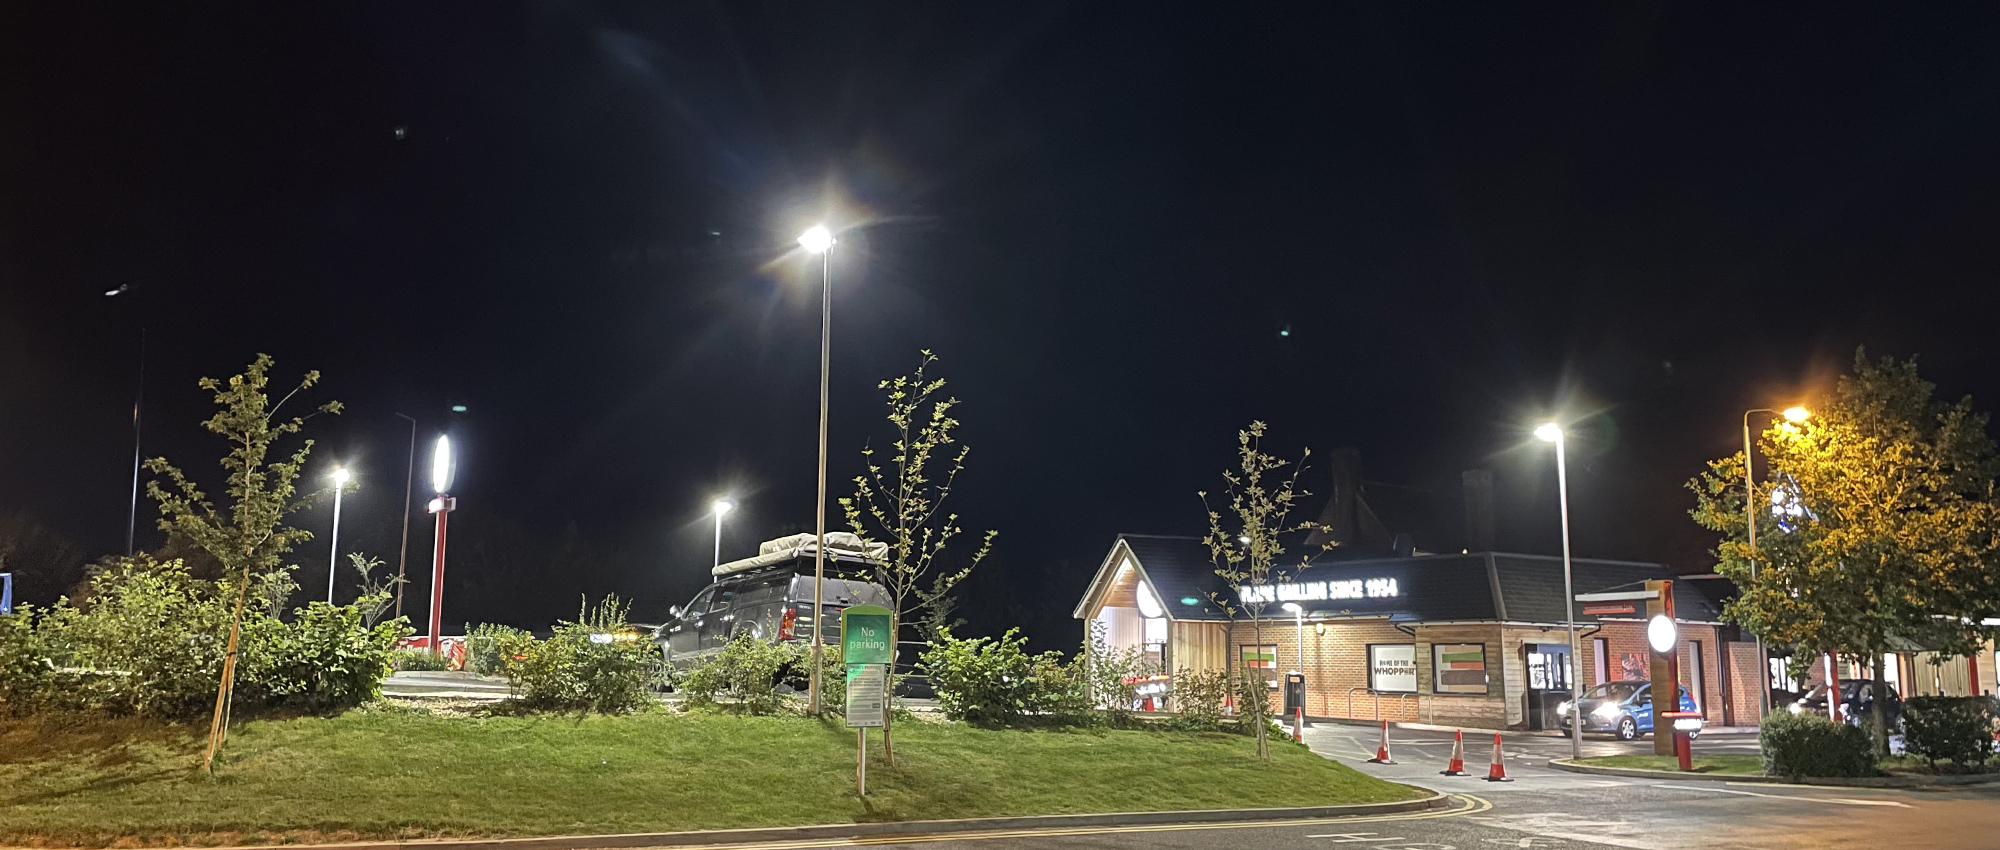 Marwood Lighting Solutions - Burger King Car Park Scheme